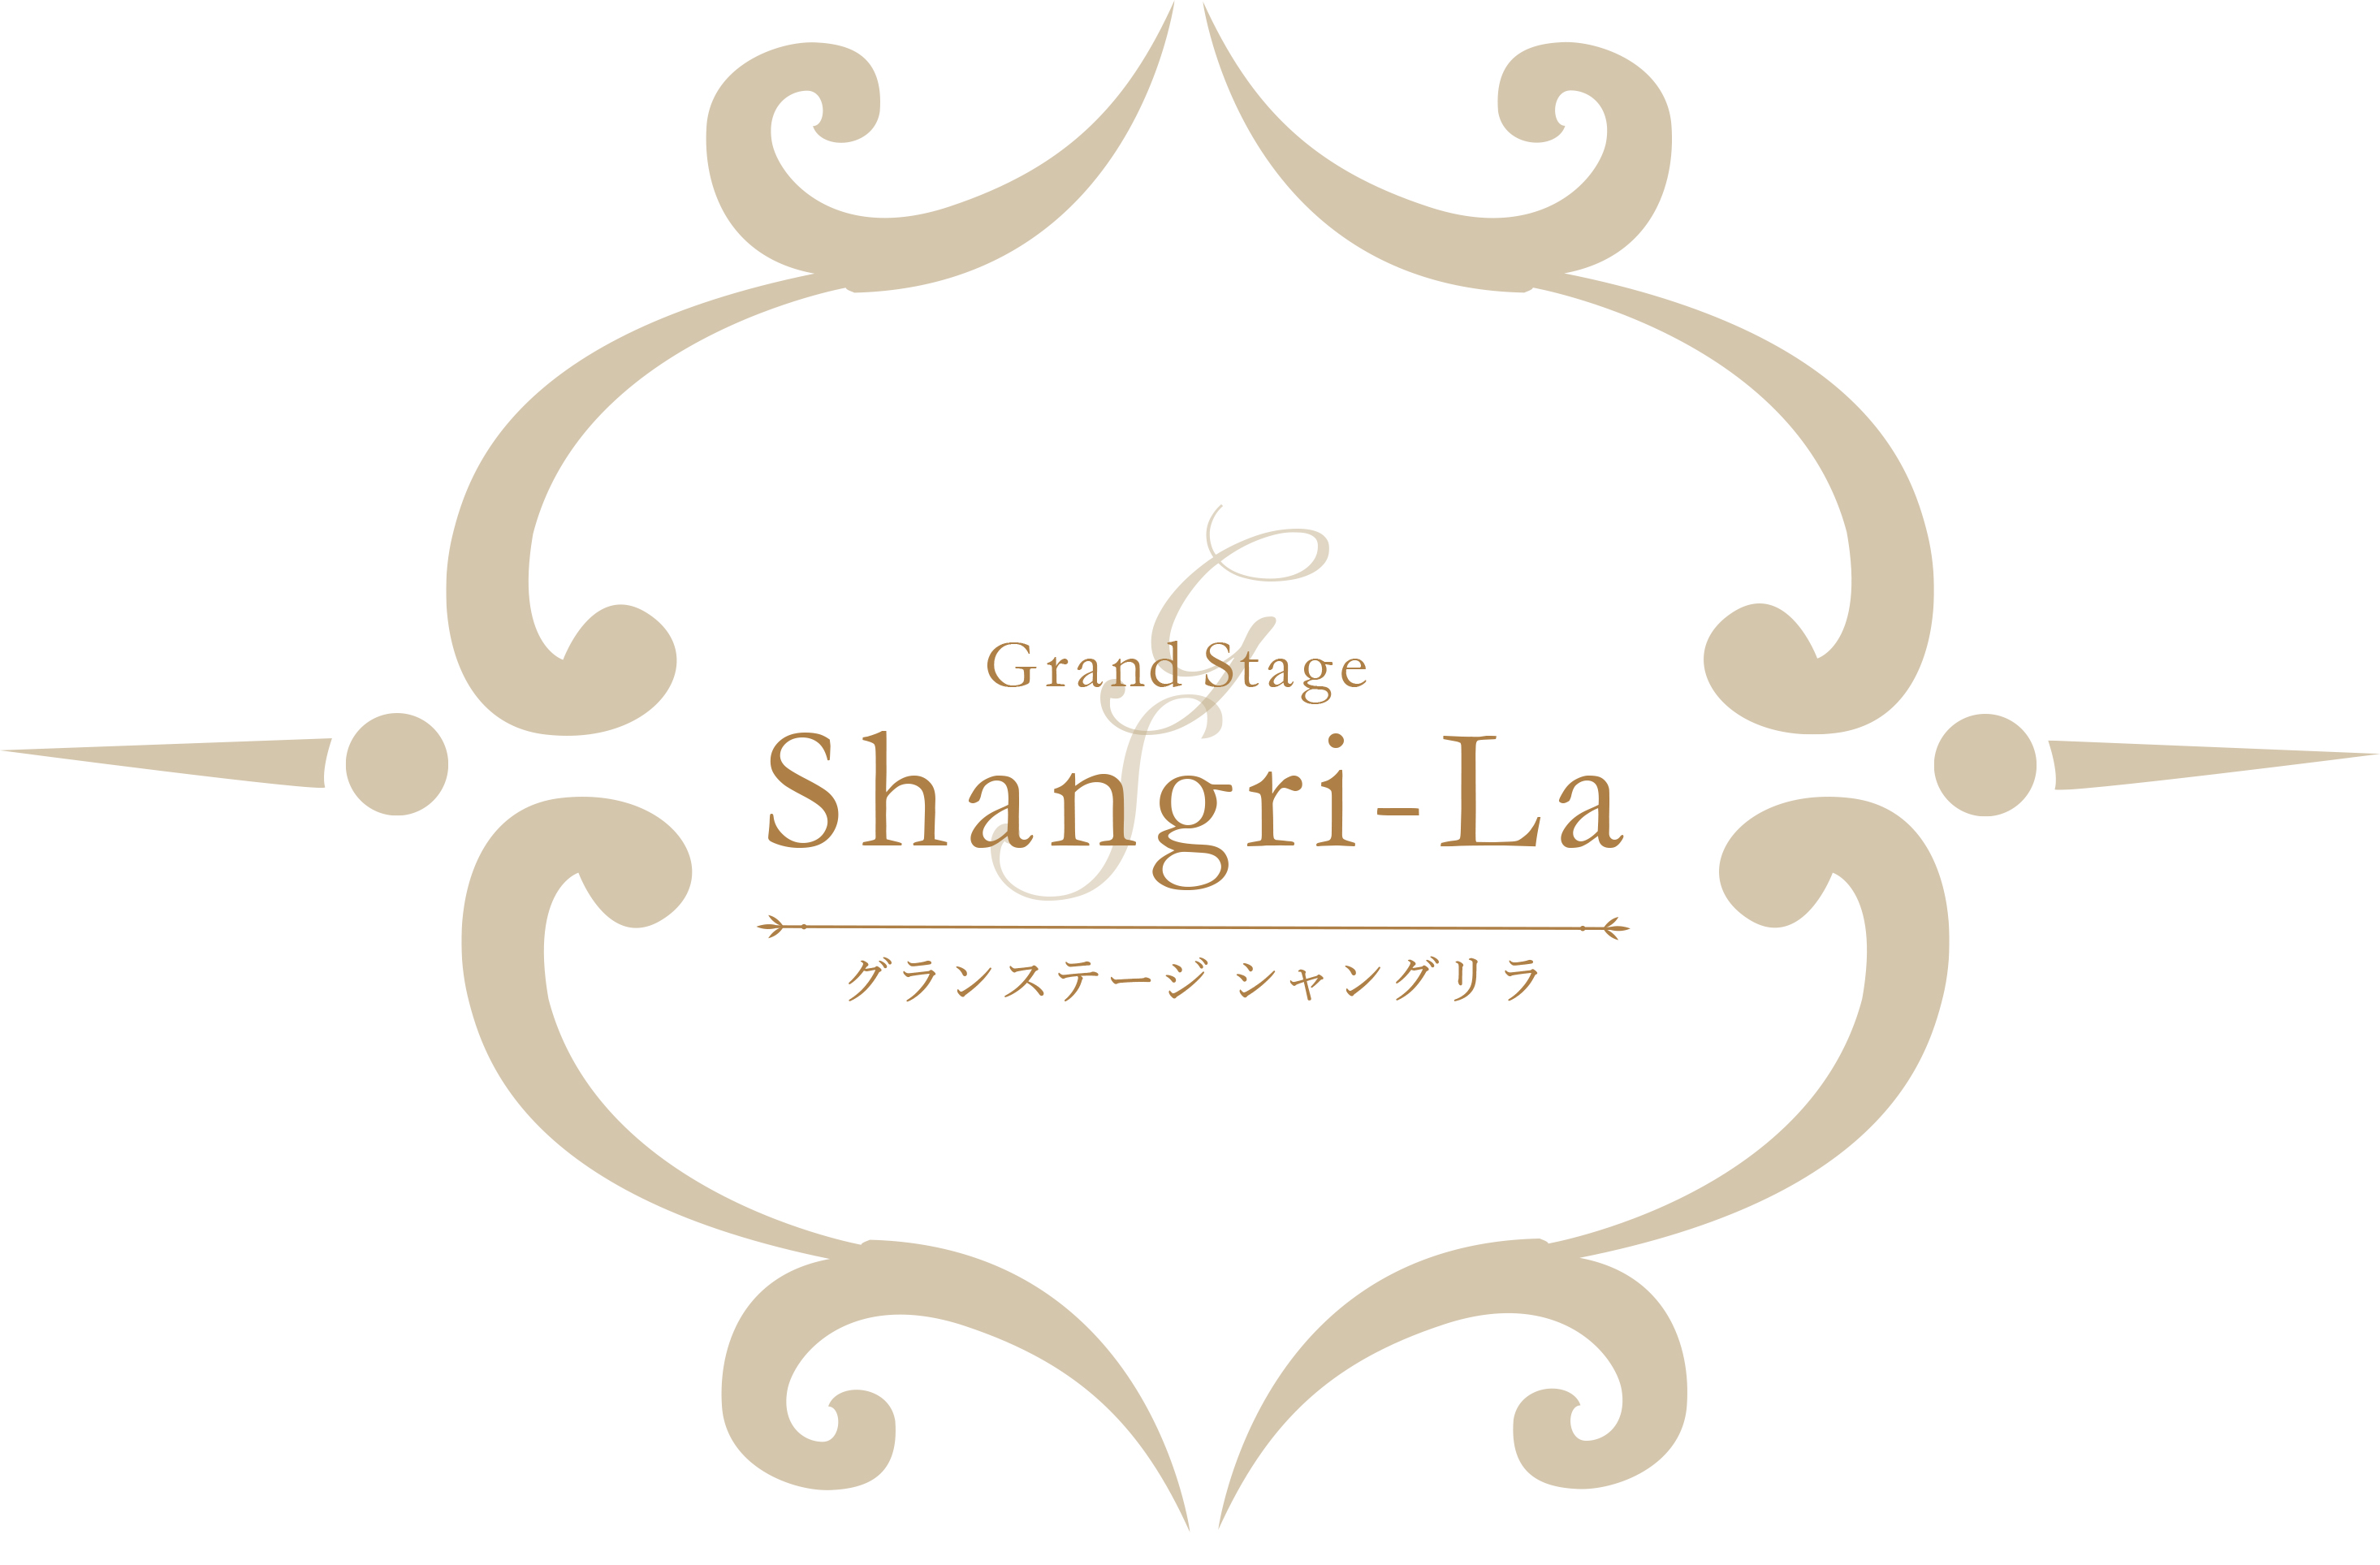 Grand Stage Shangri-La